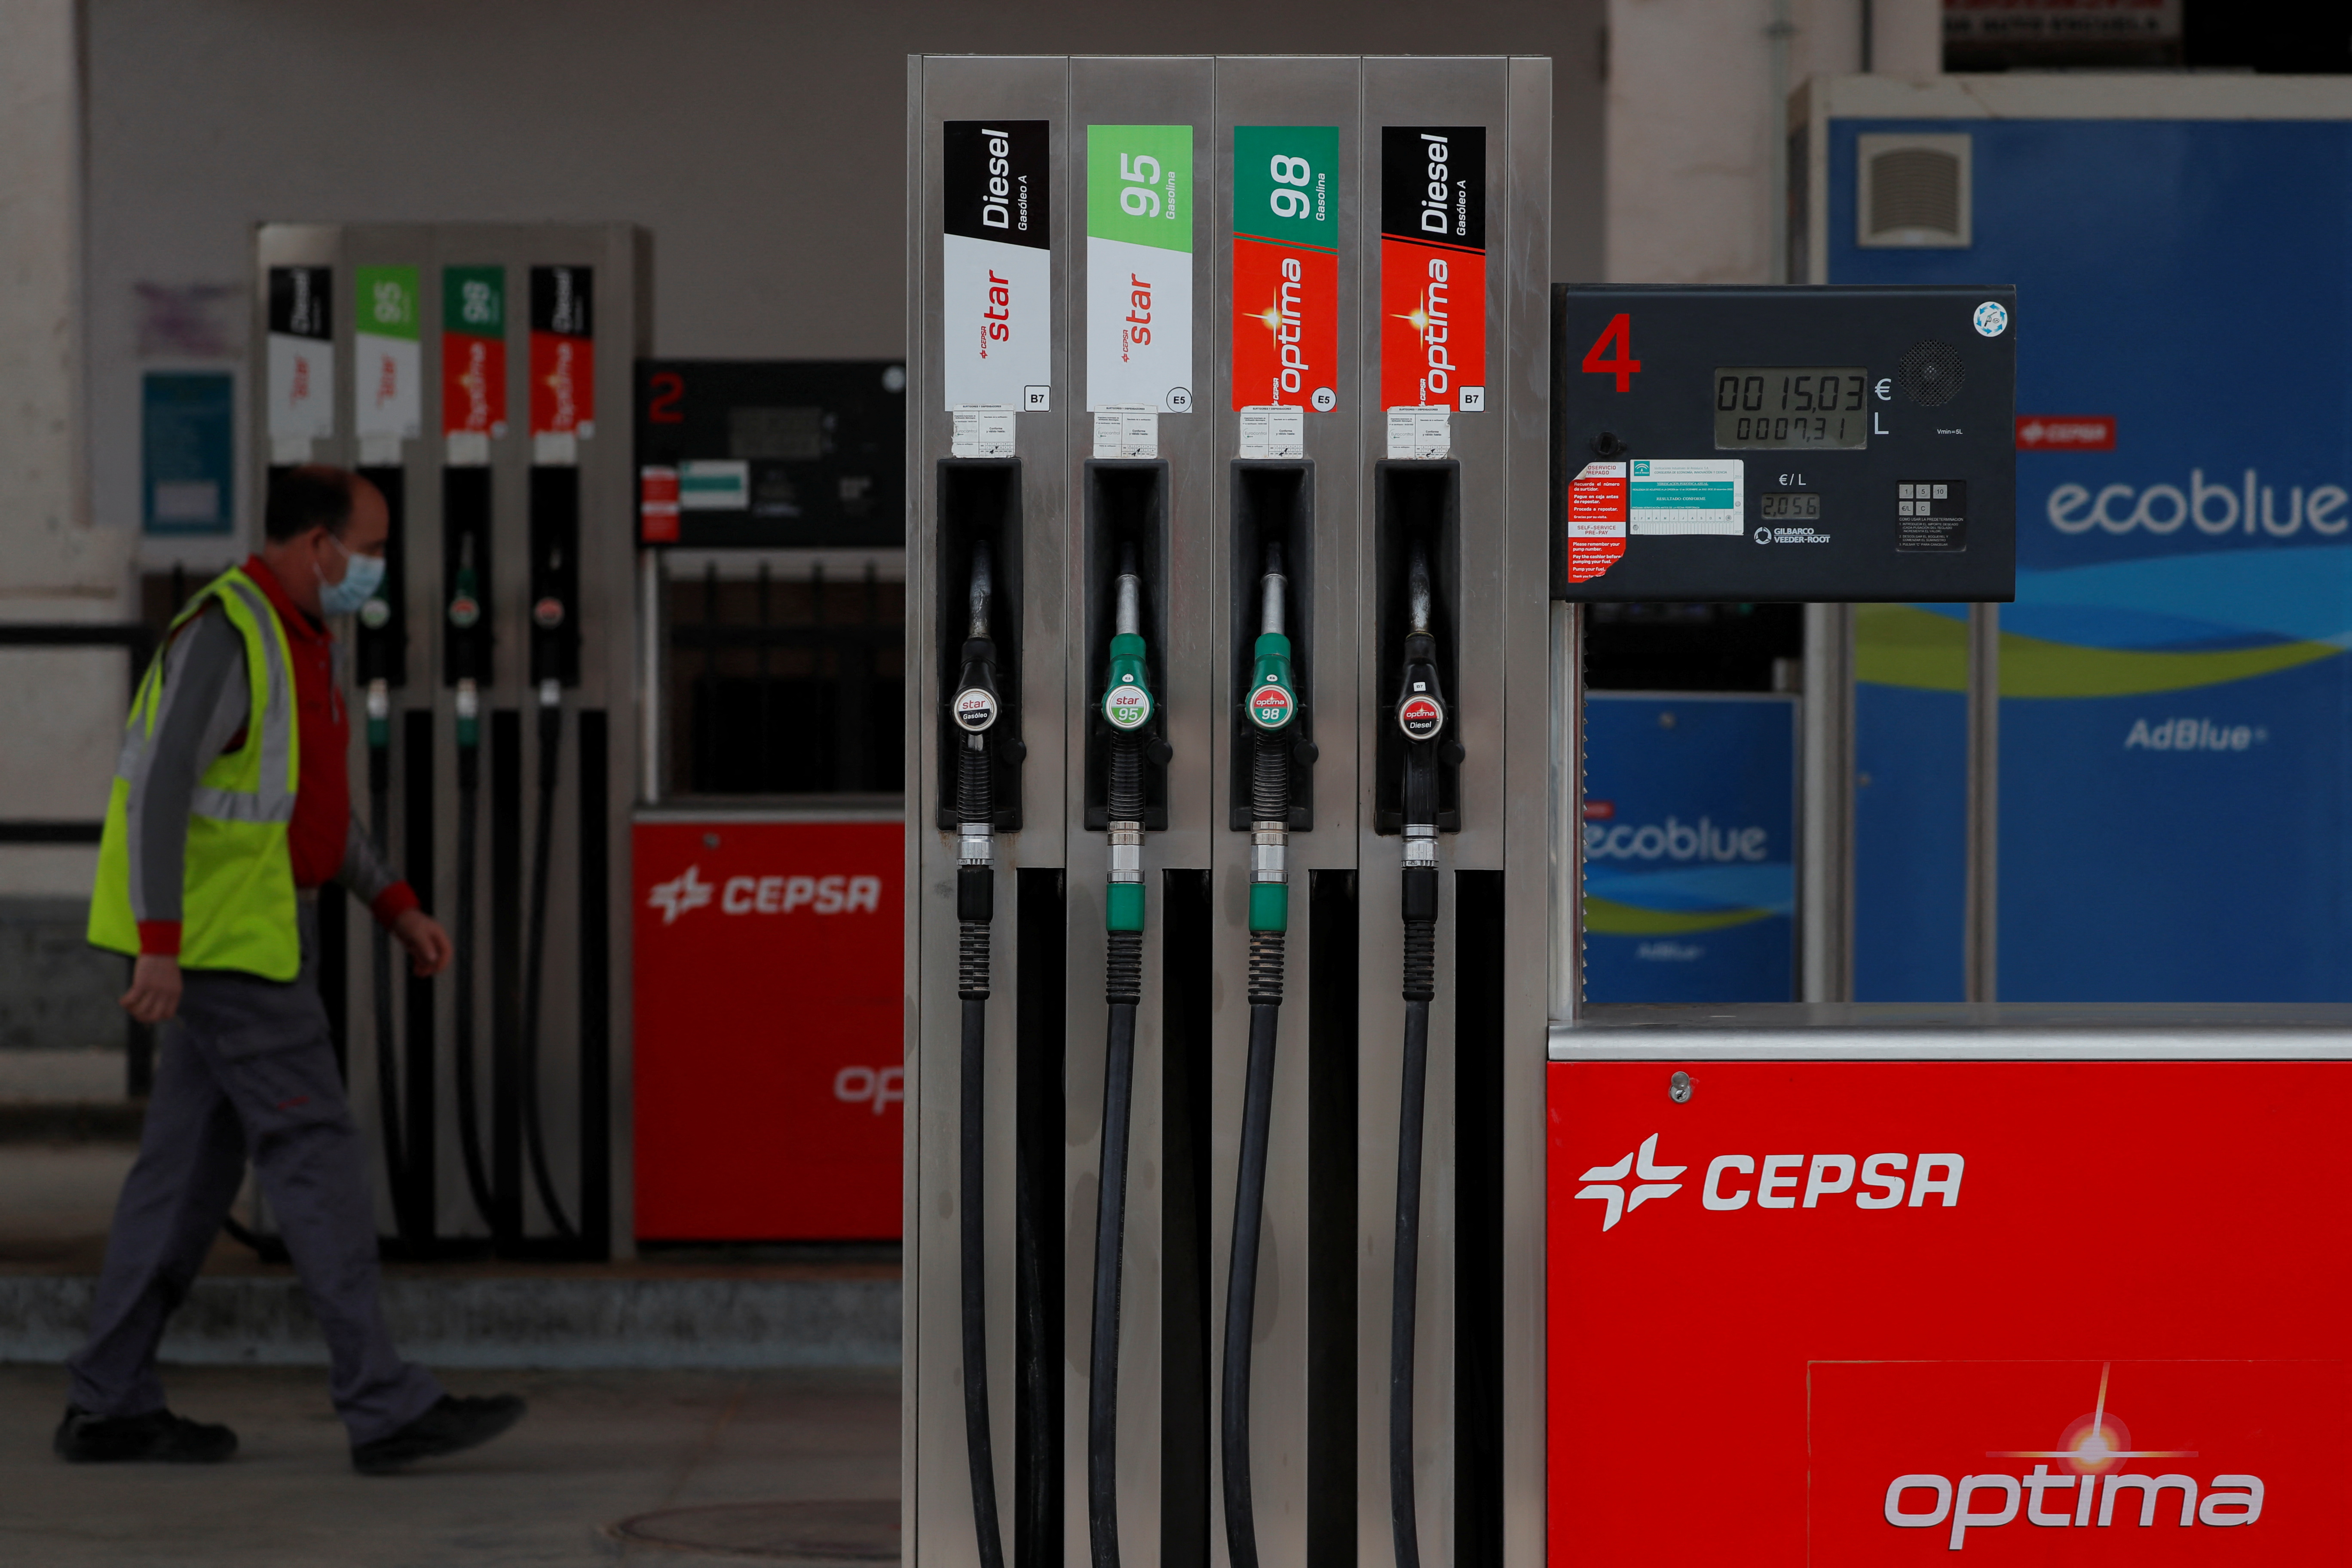 A worker walks past fuel pumps at a Cepsa petrol station in Ronda